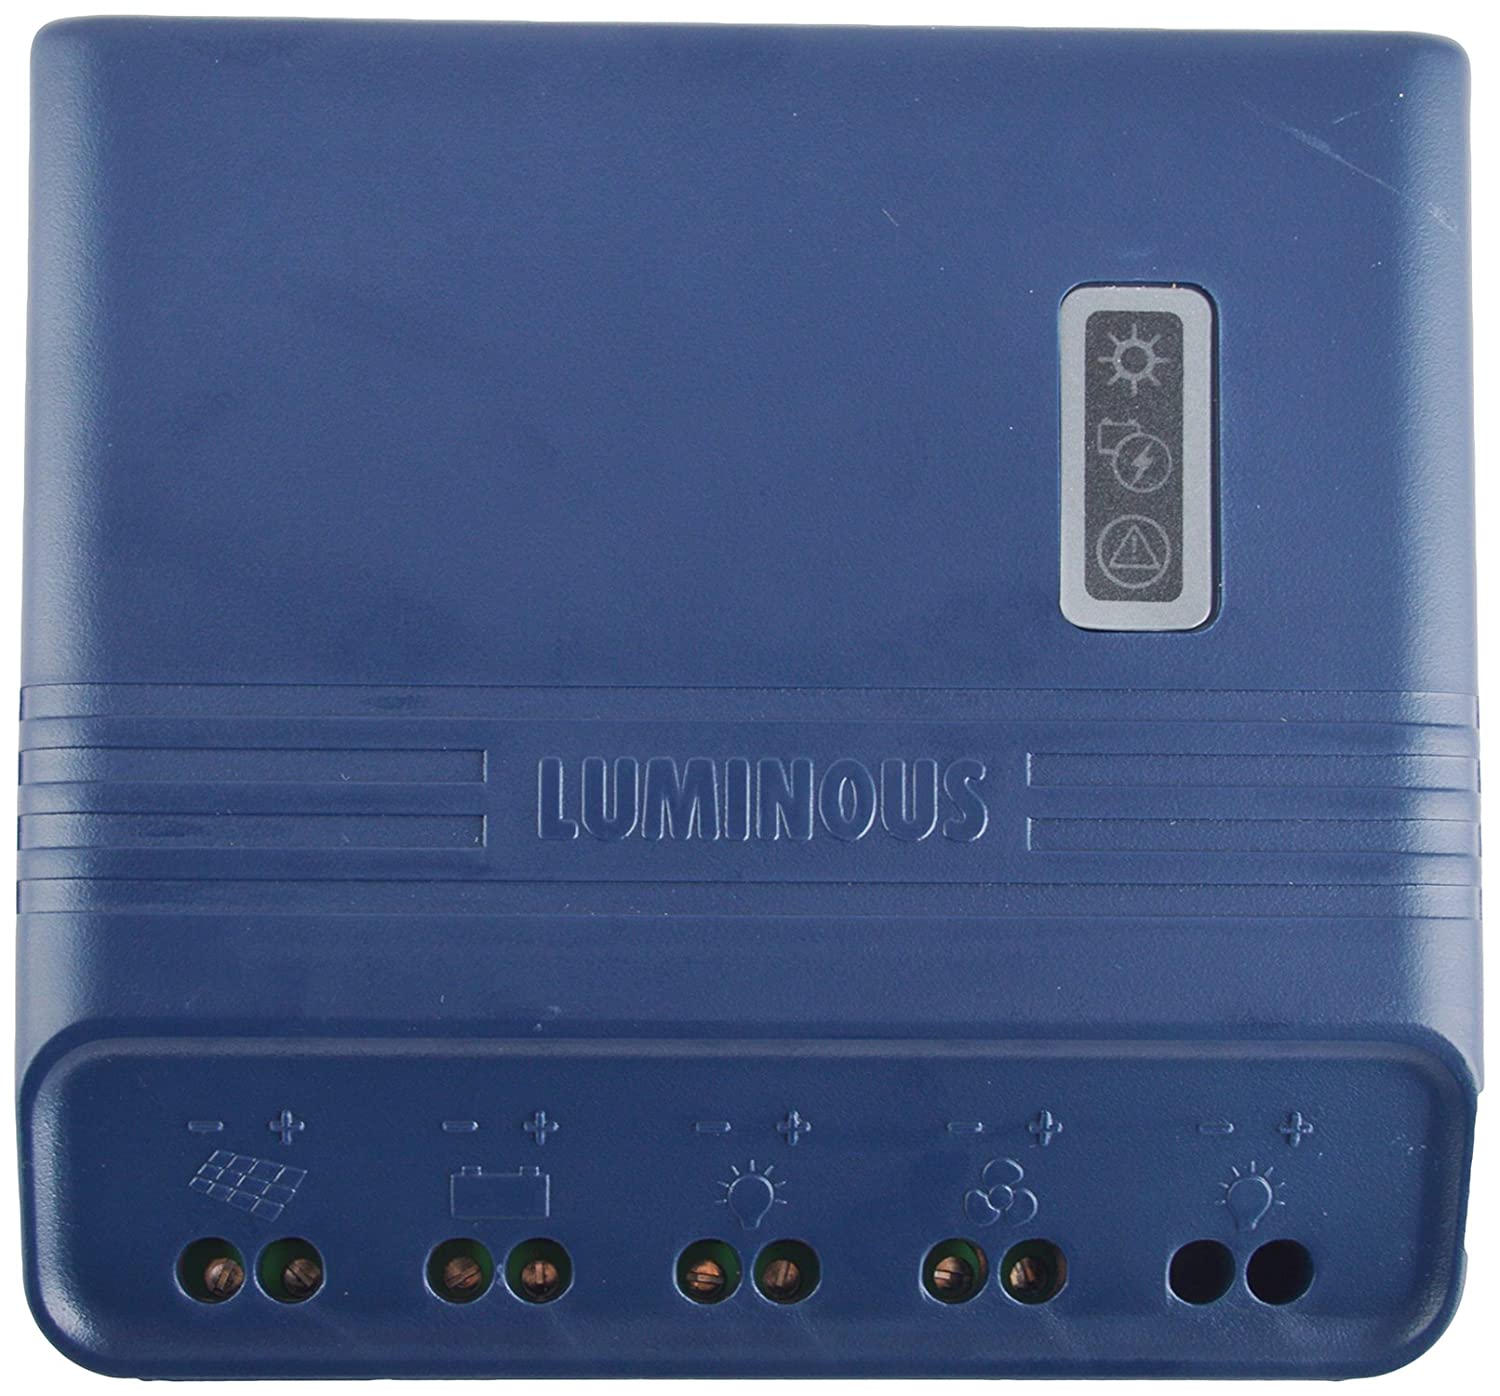 Luminous Solar Charge Controller 10 Amp - Blue, SCC1210 with USB port - Apollo Universe